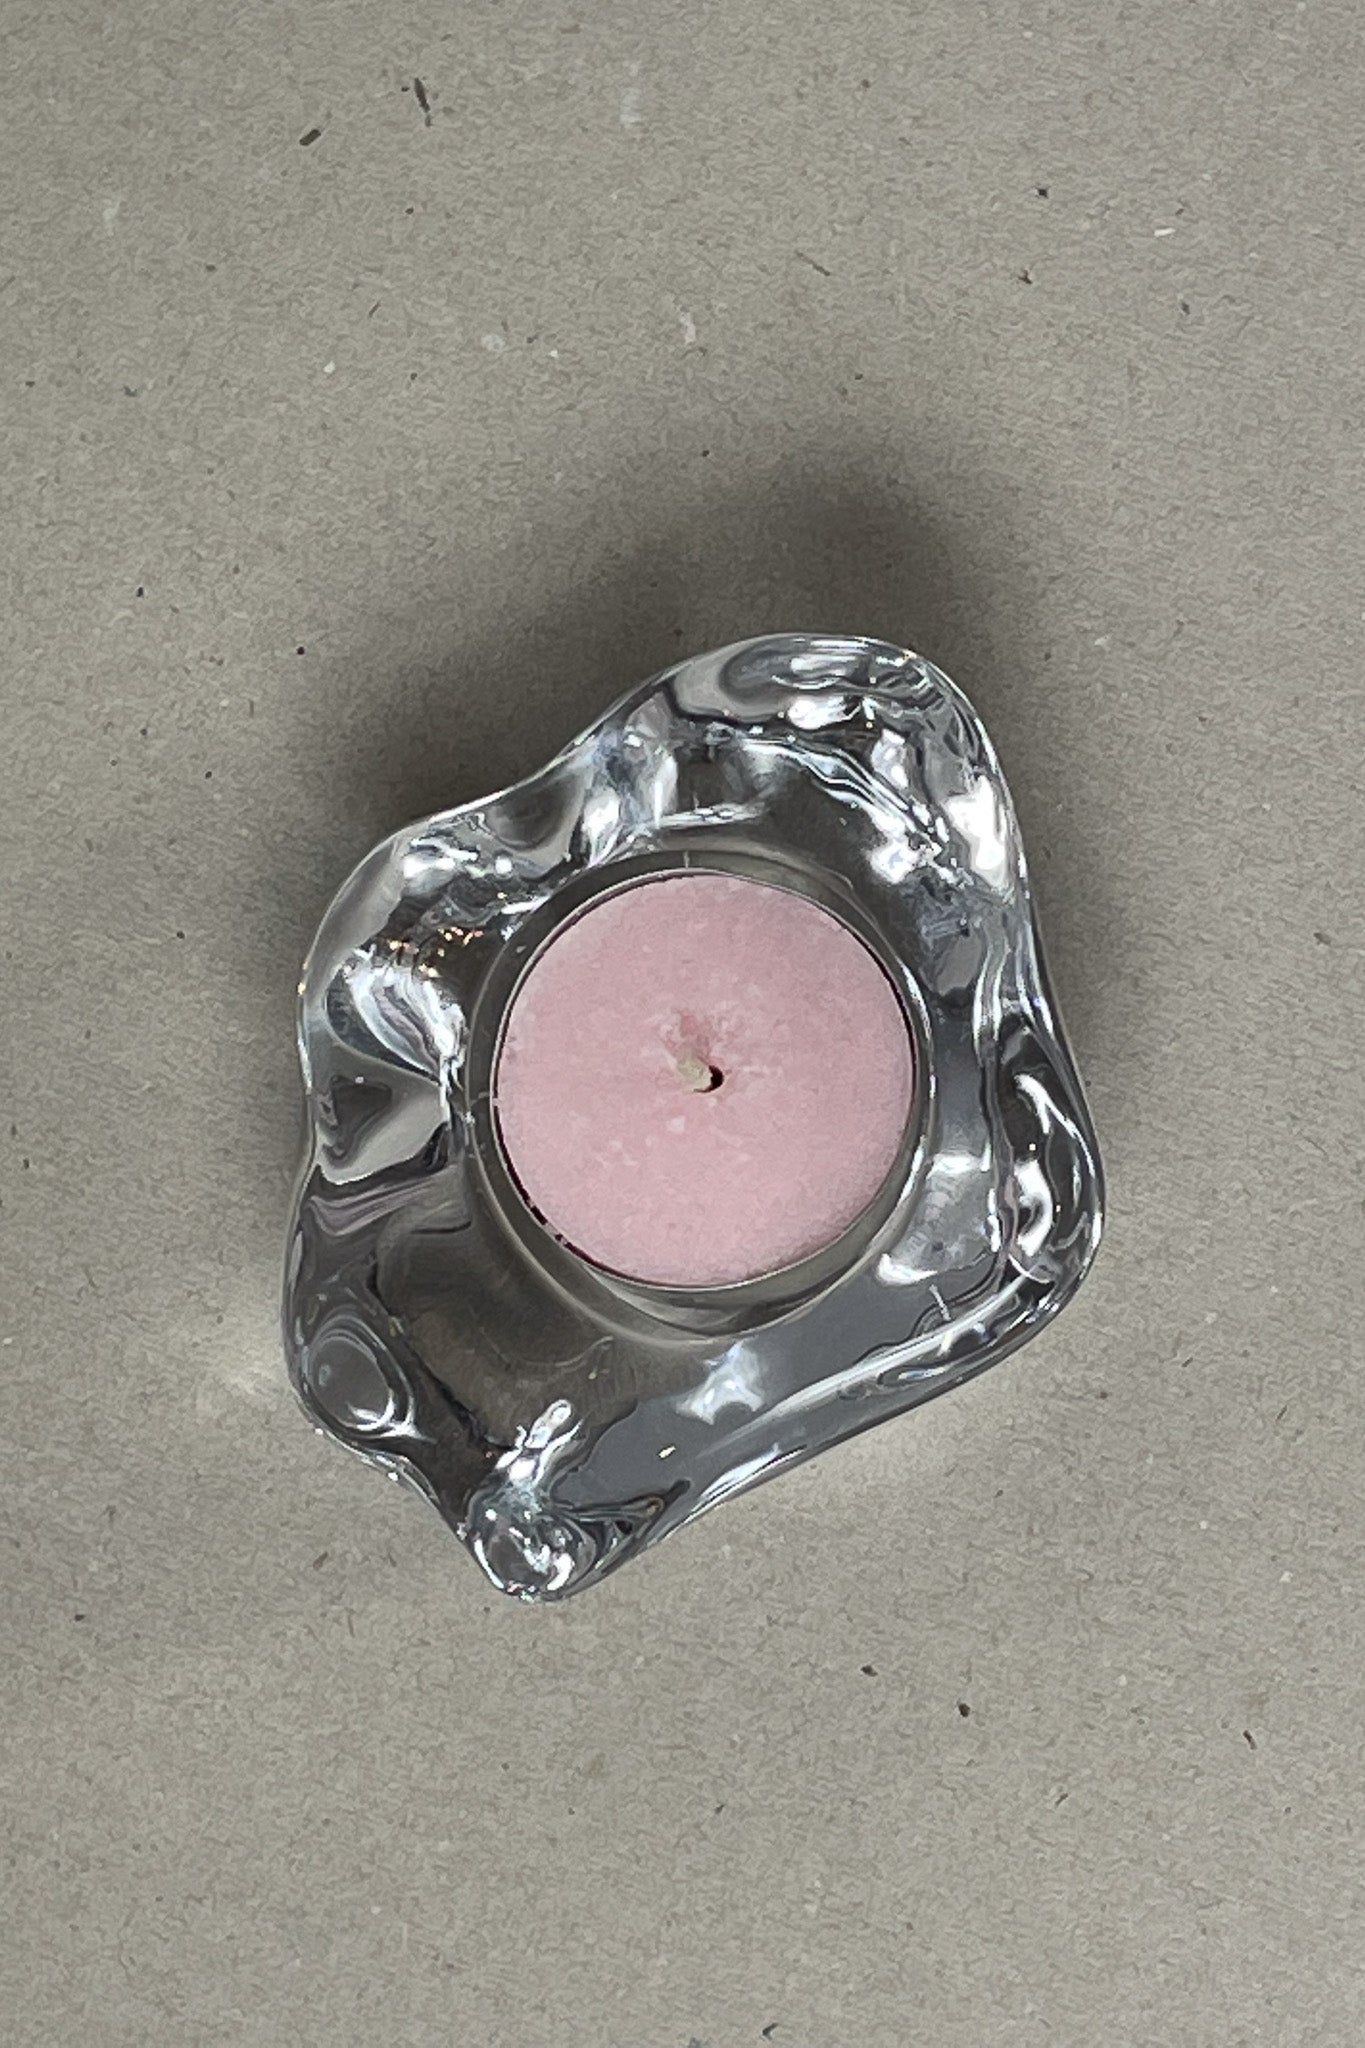 Ichendorf Stone Tealight Candle Holder